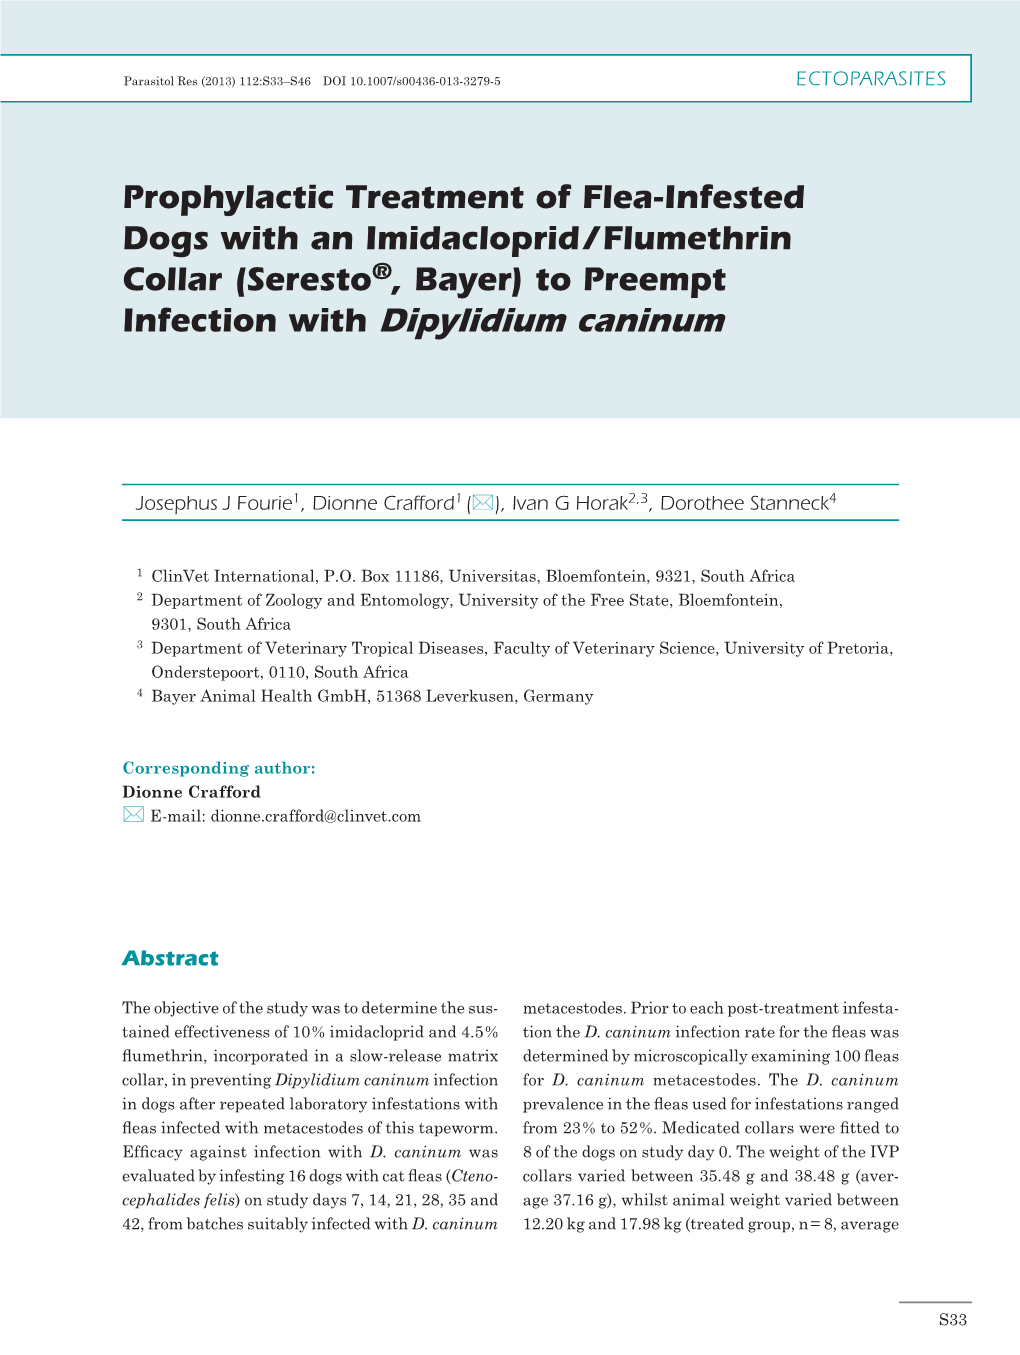 Infection with Dipylidium Caninum